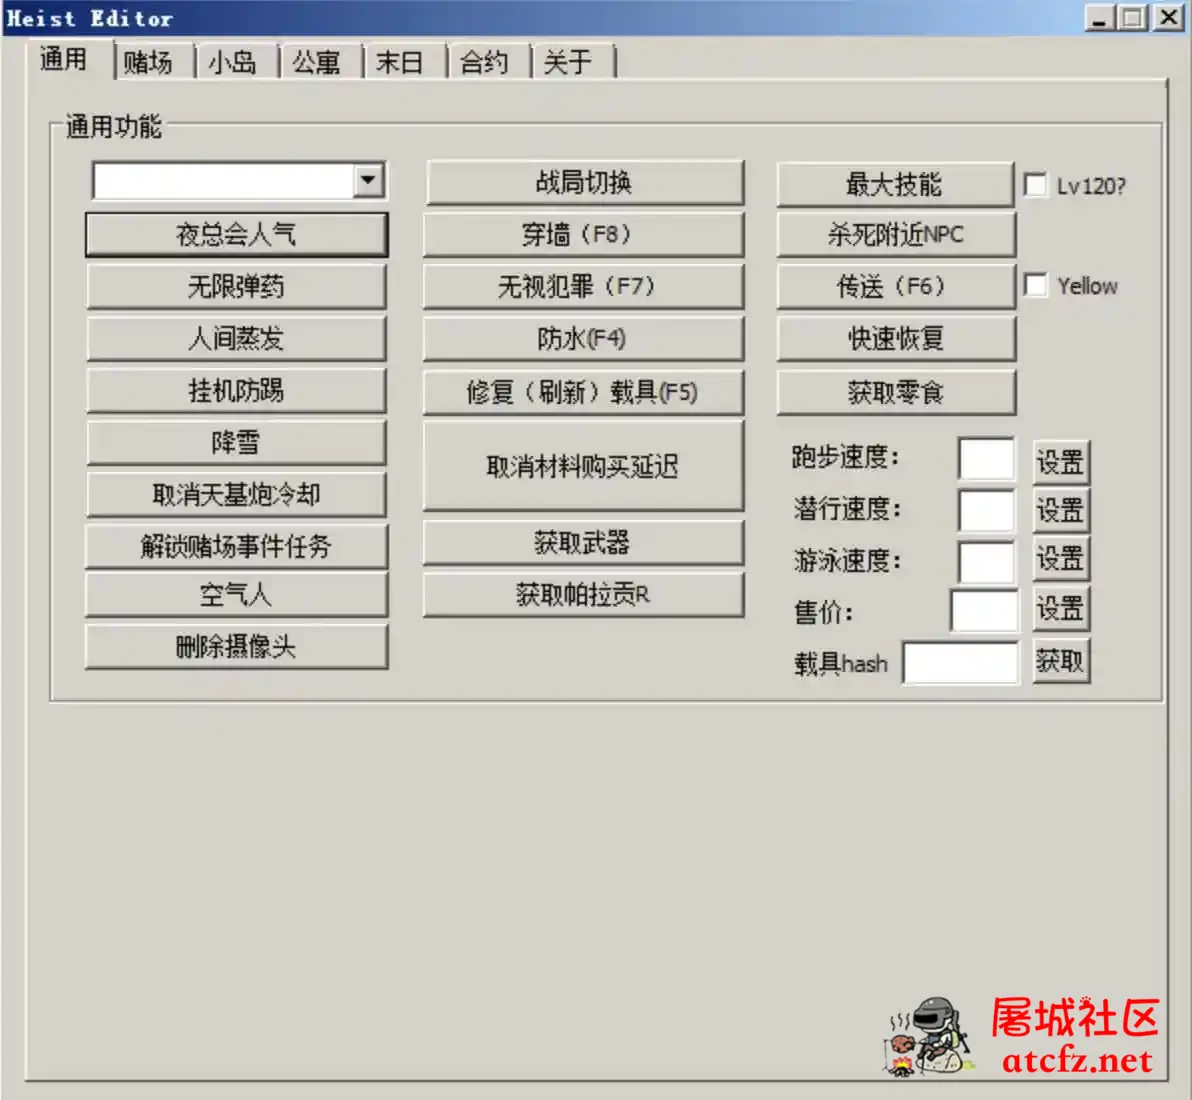 GTA5 Heist Editor外部抢劫编辑器 v3.5.7 屠城辅助网www.tcfz1.com2267